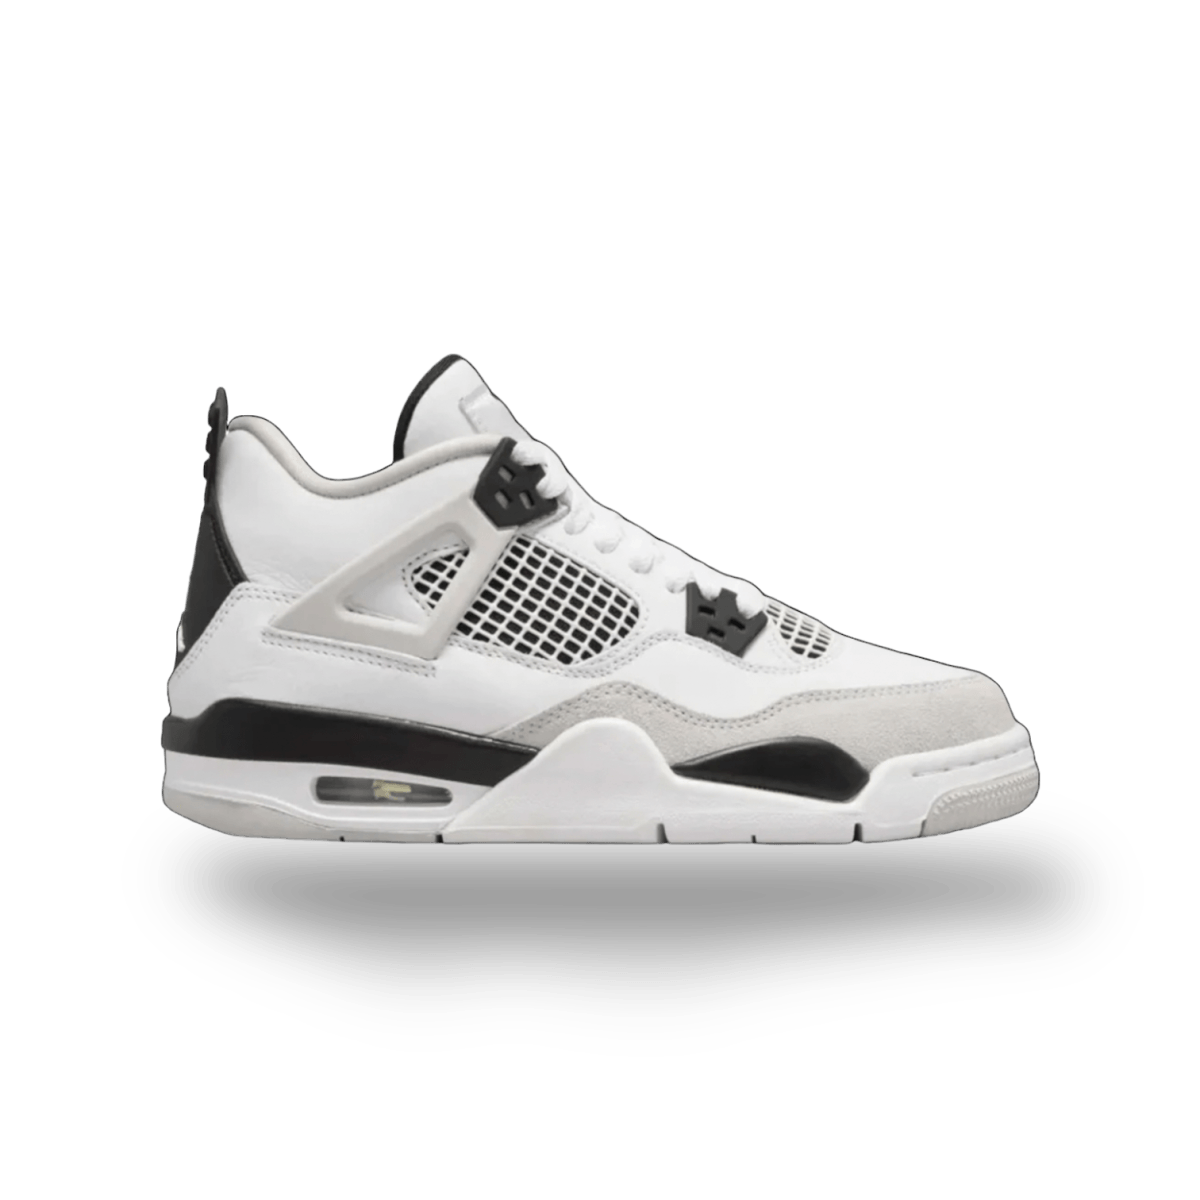 Jordan 4 Retro Military Black - Toddler - Mid Sneaker - Jordan - Jawns on Fire - sneakers